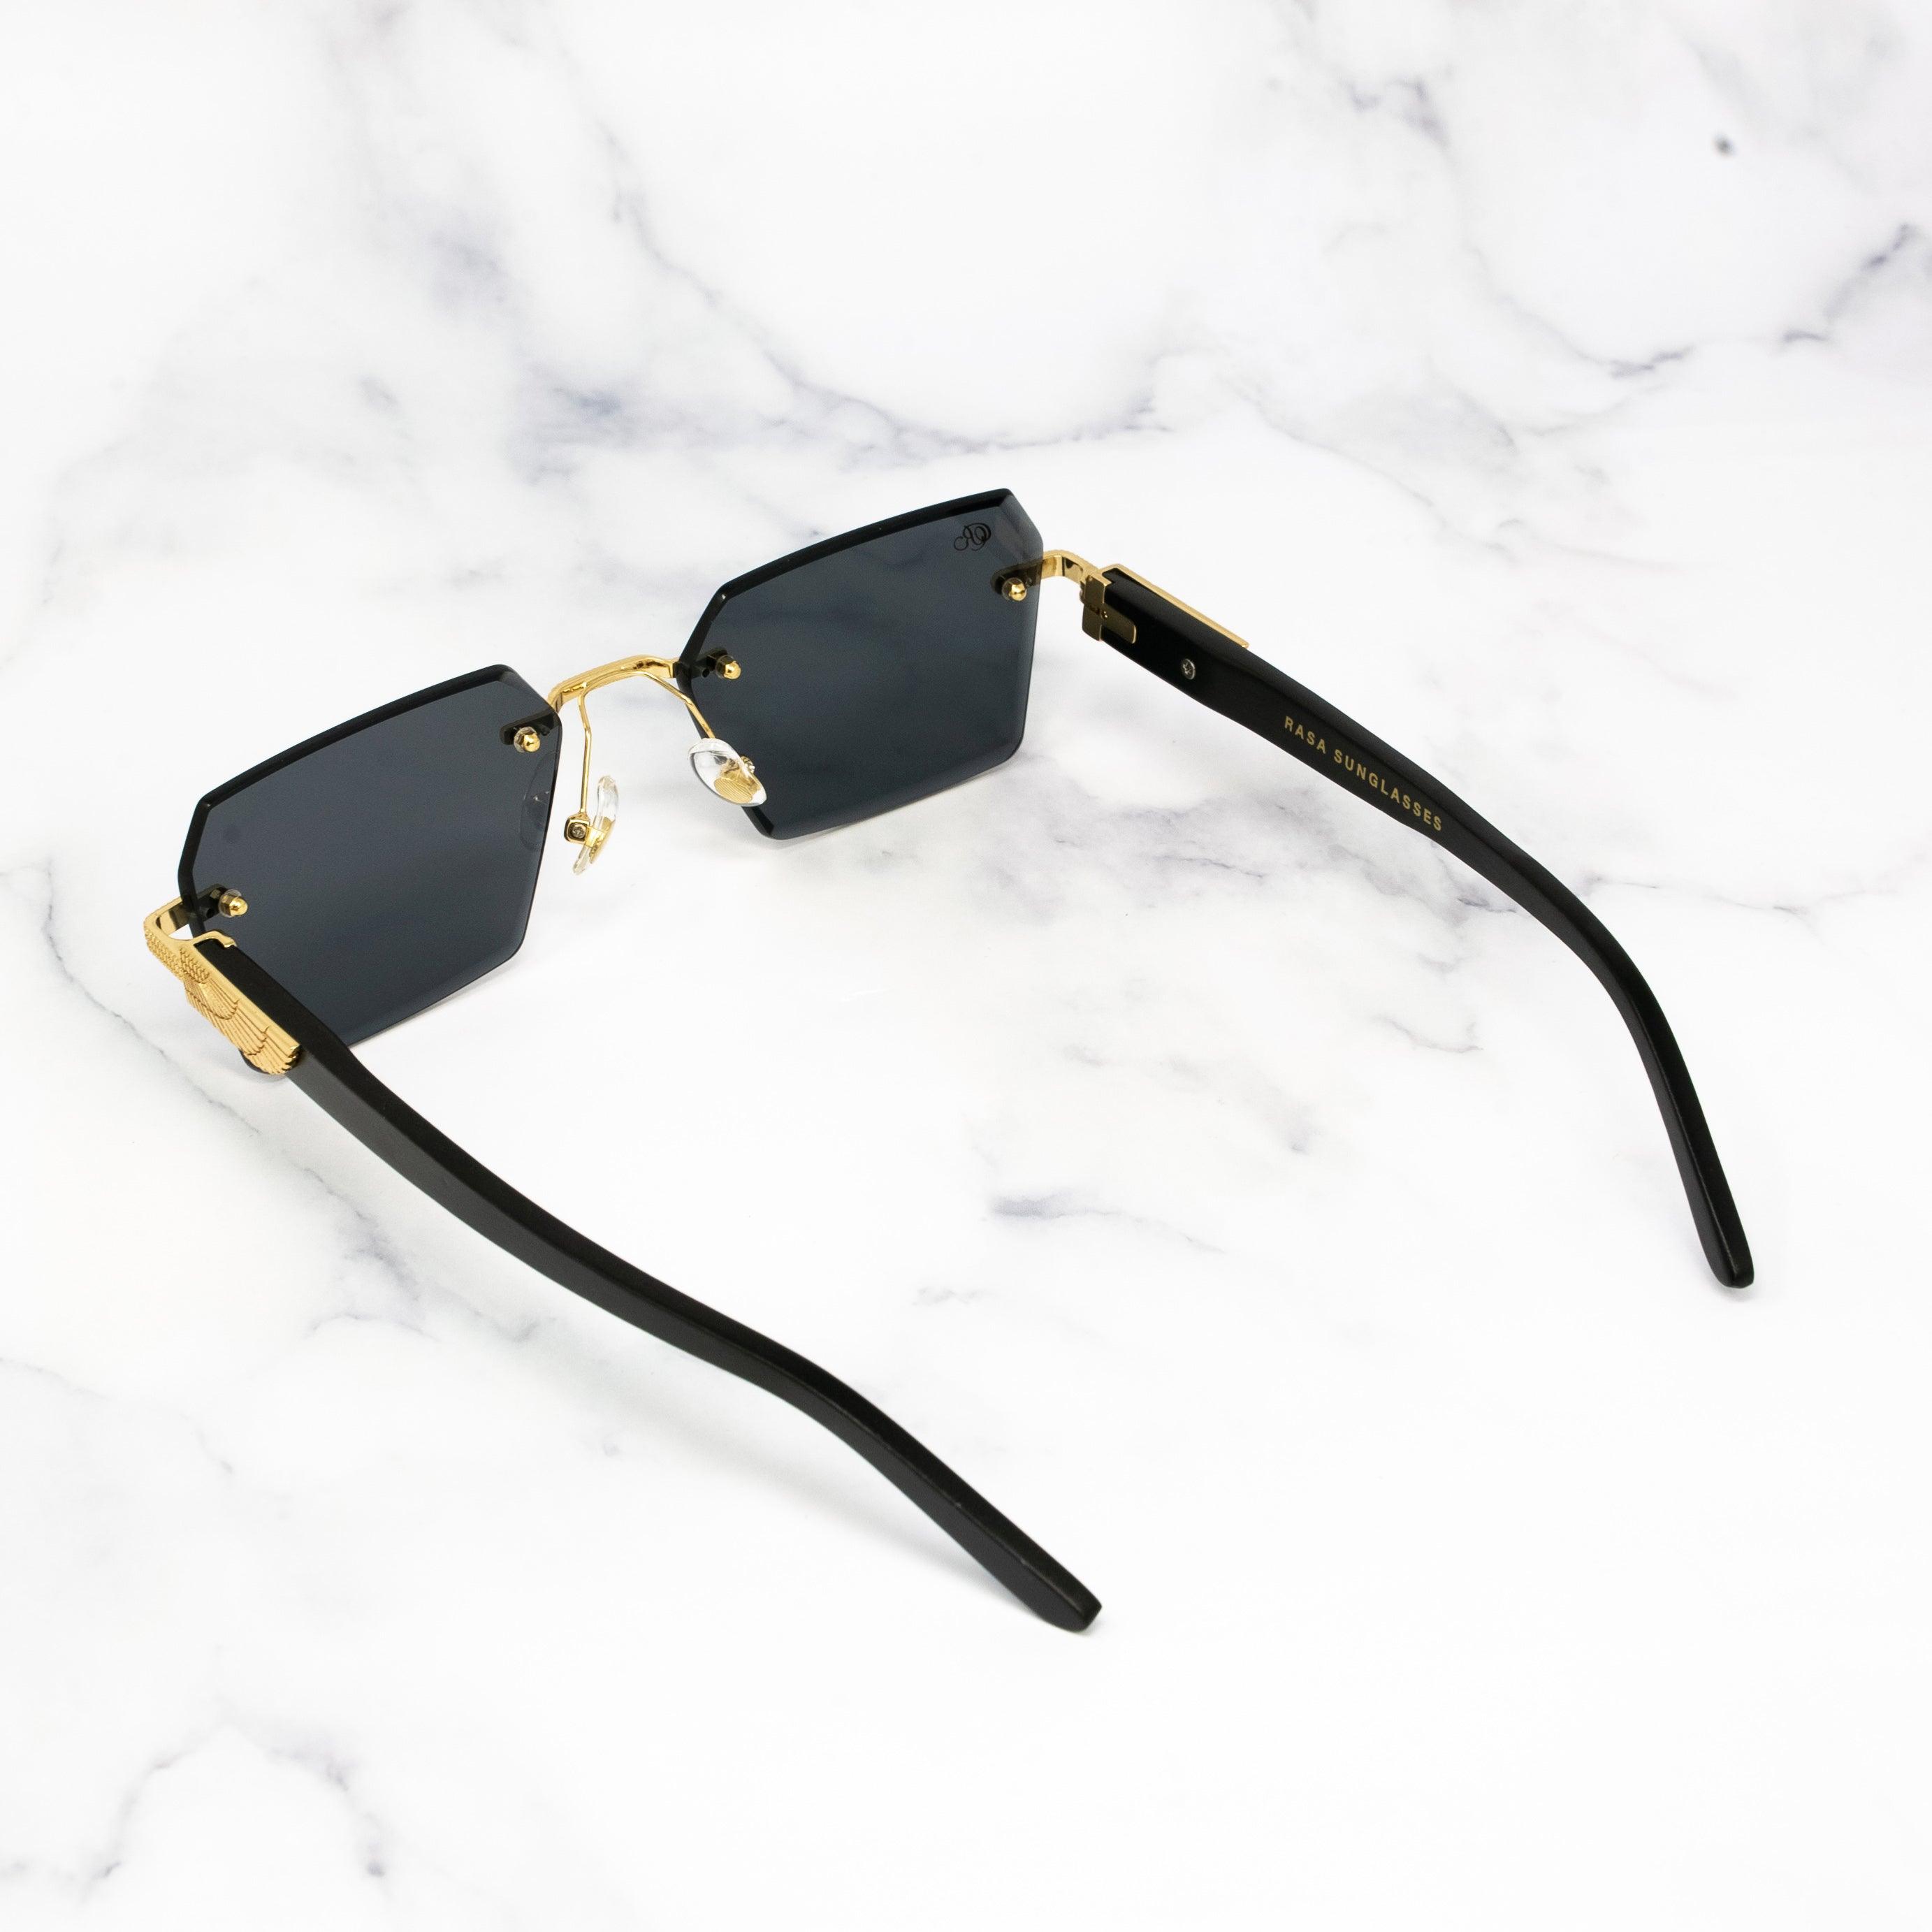 THE CANARSIE - BLACK GOLD - Rasa Sunglasses